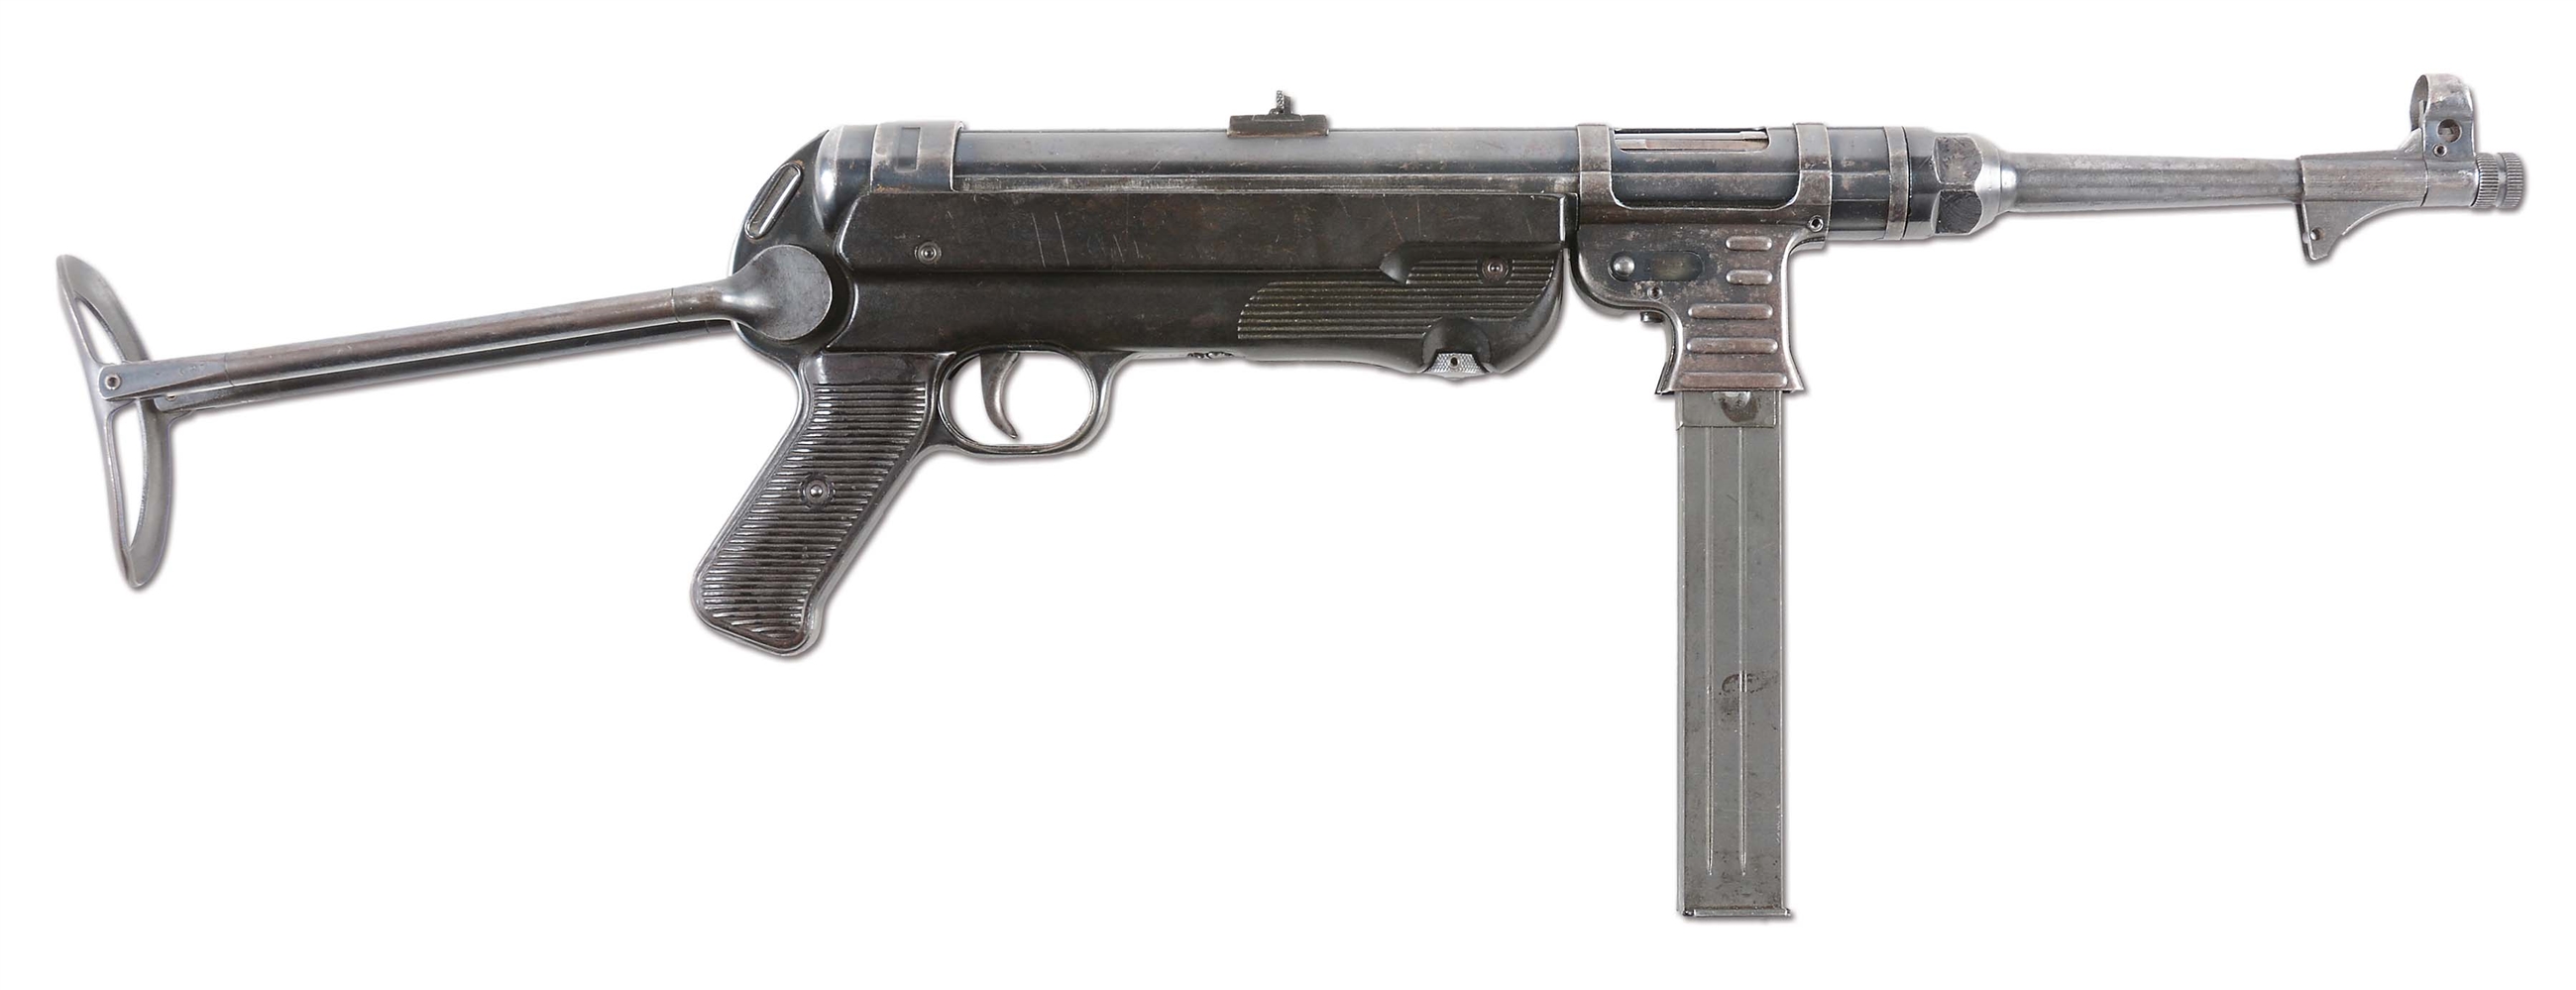 (N) ALL ORIGINAL HAENEL MANUFACTURED MATCHING NUMBERED GERMAN WORLD WAR II MP-40 MACHINE GUN (CURIO AND RELIC).